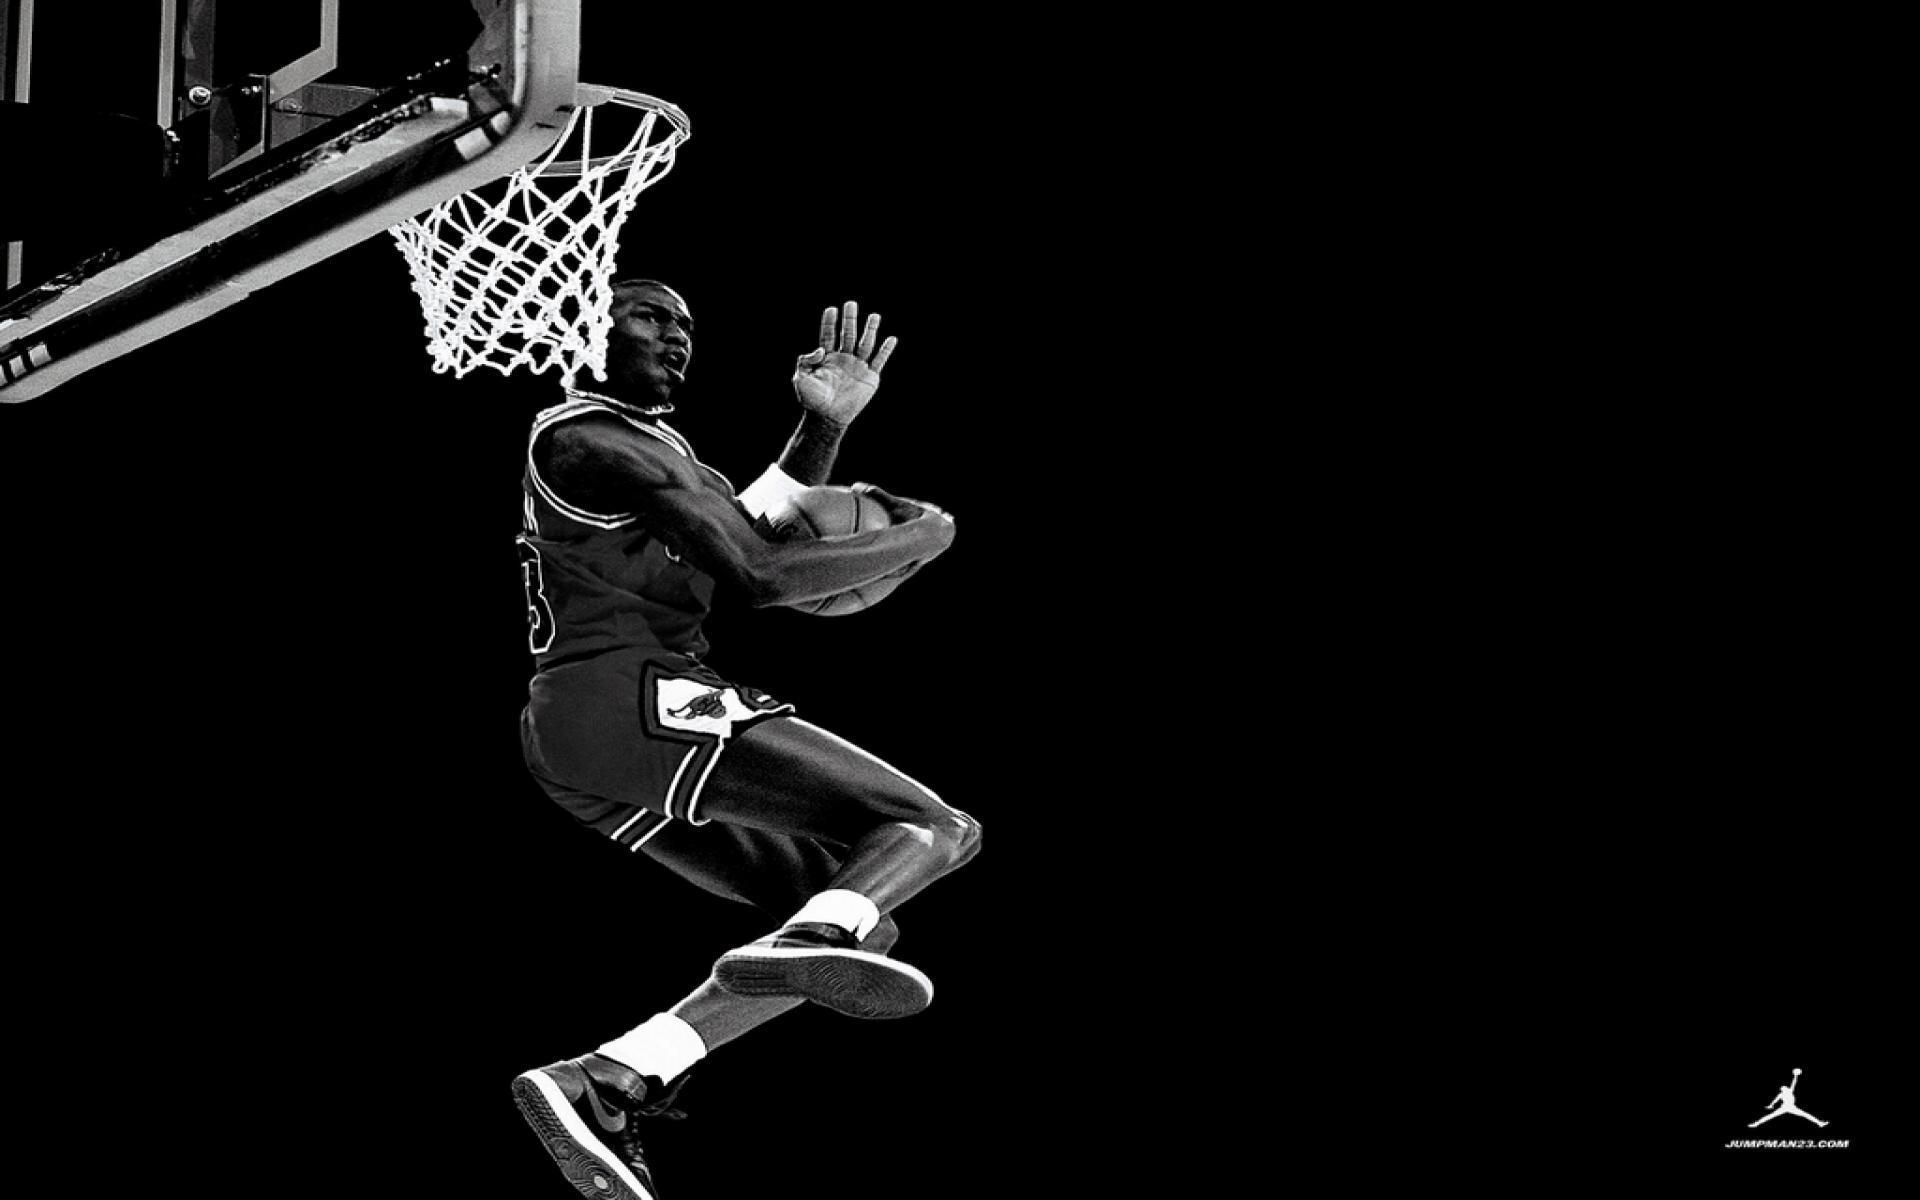 A black and white wallpaper of Michael Jordan scoring a basket. - Michael Jordan